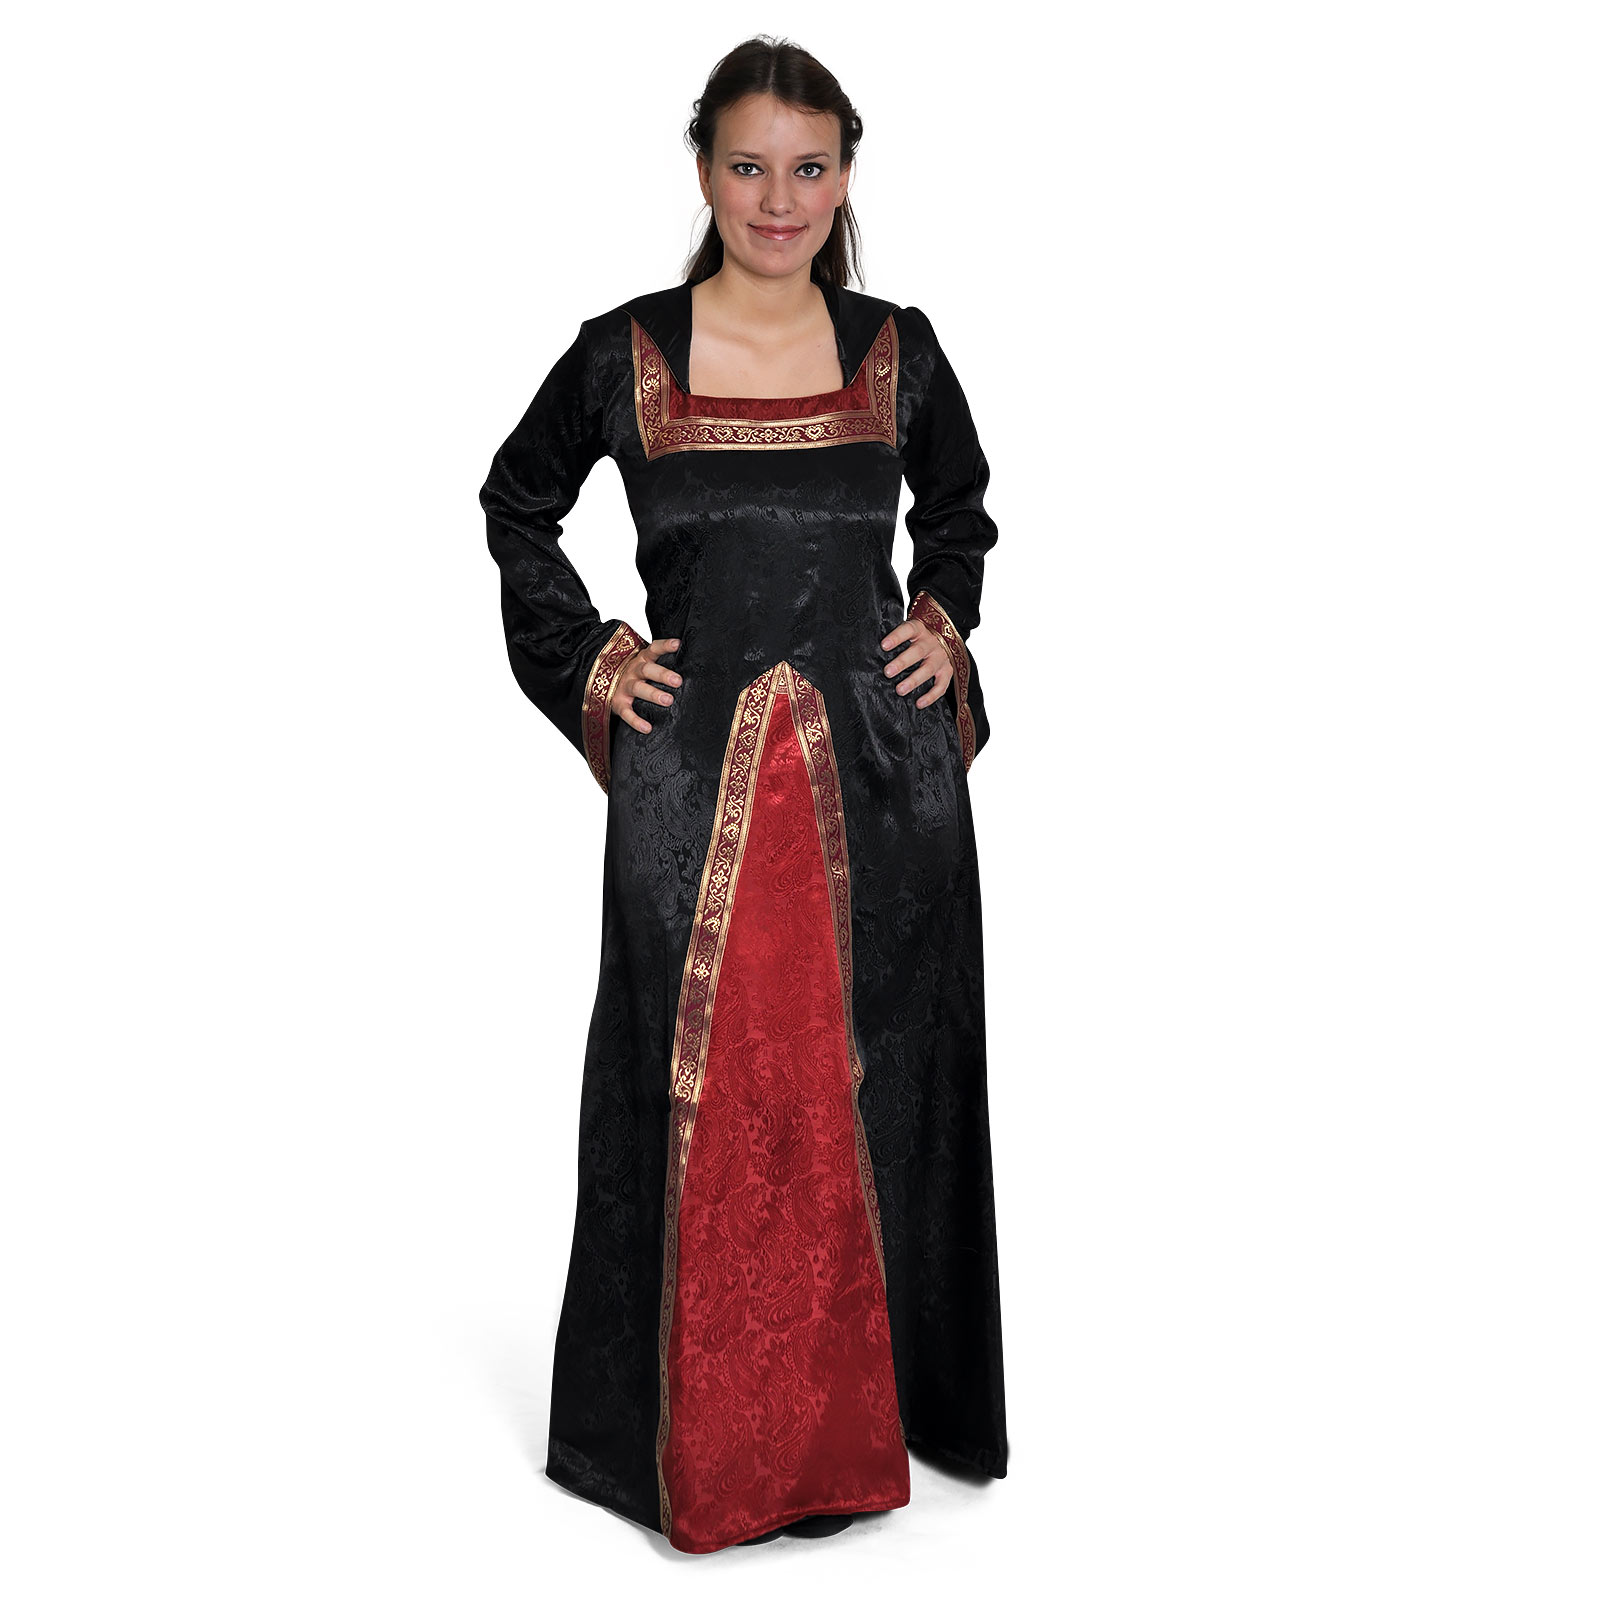 Mittelalter Kleid Otilia mit Zipfelkapuze schwarz-bordeaux